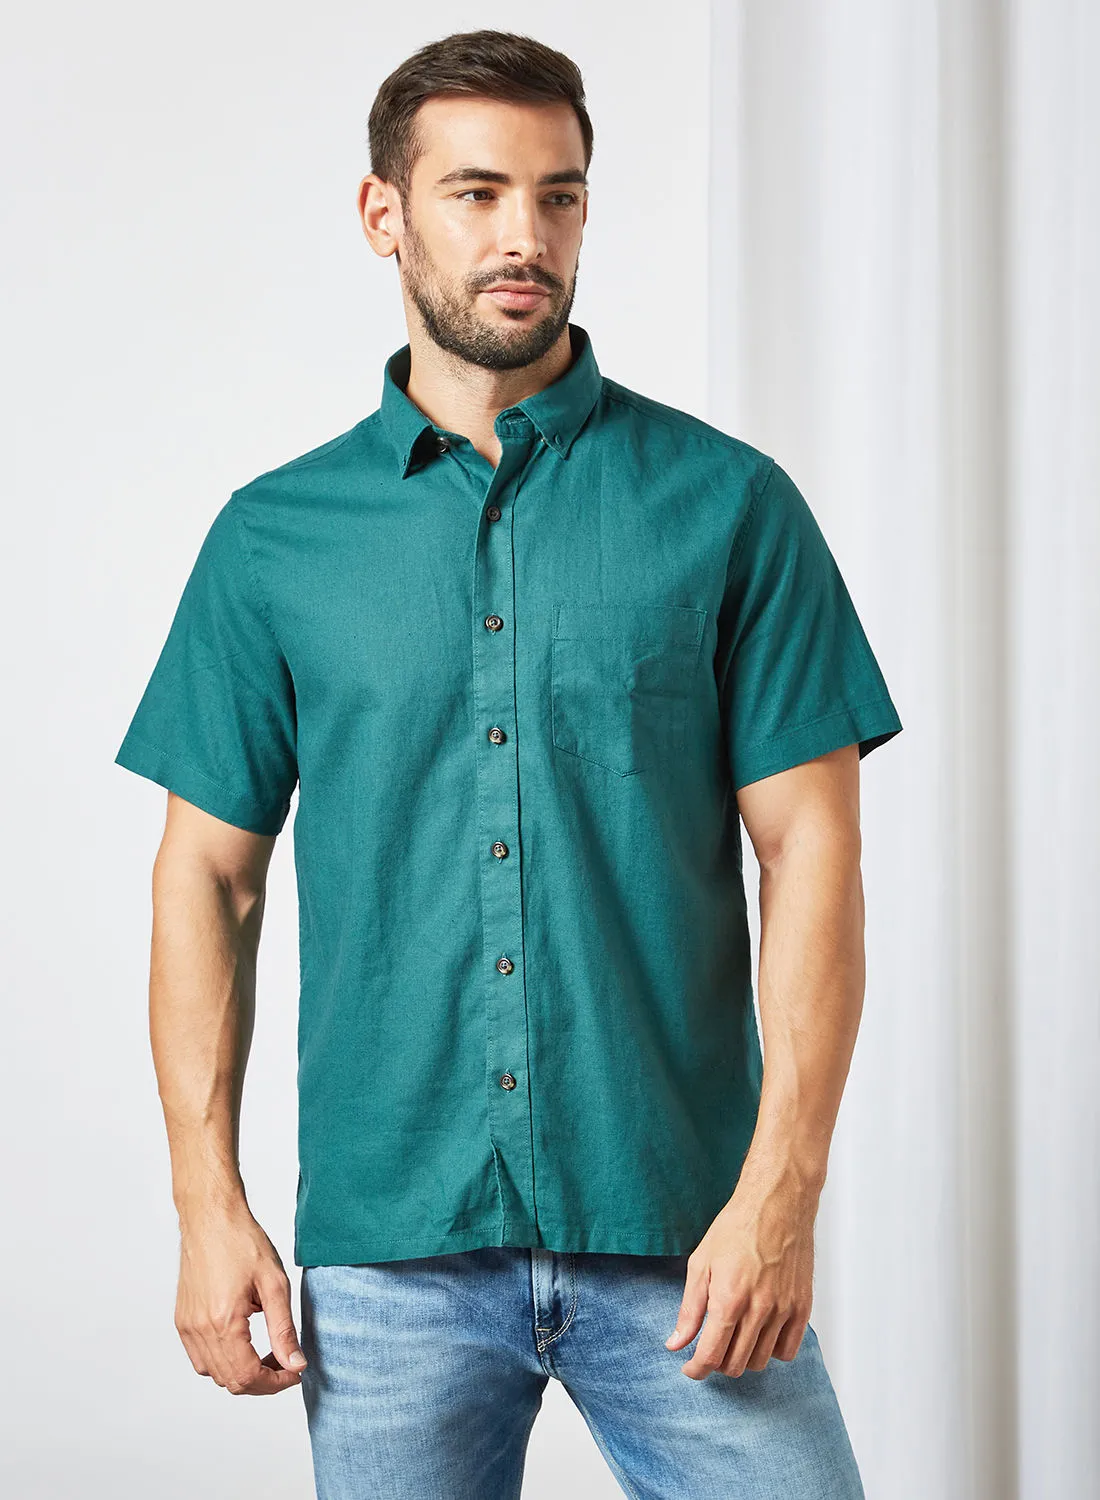 Sivvi x D'Atelier Patch Pocket Shirt Dark Green